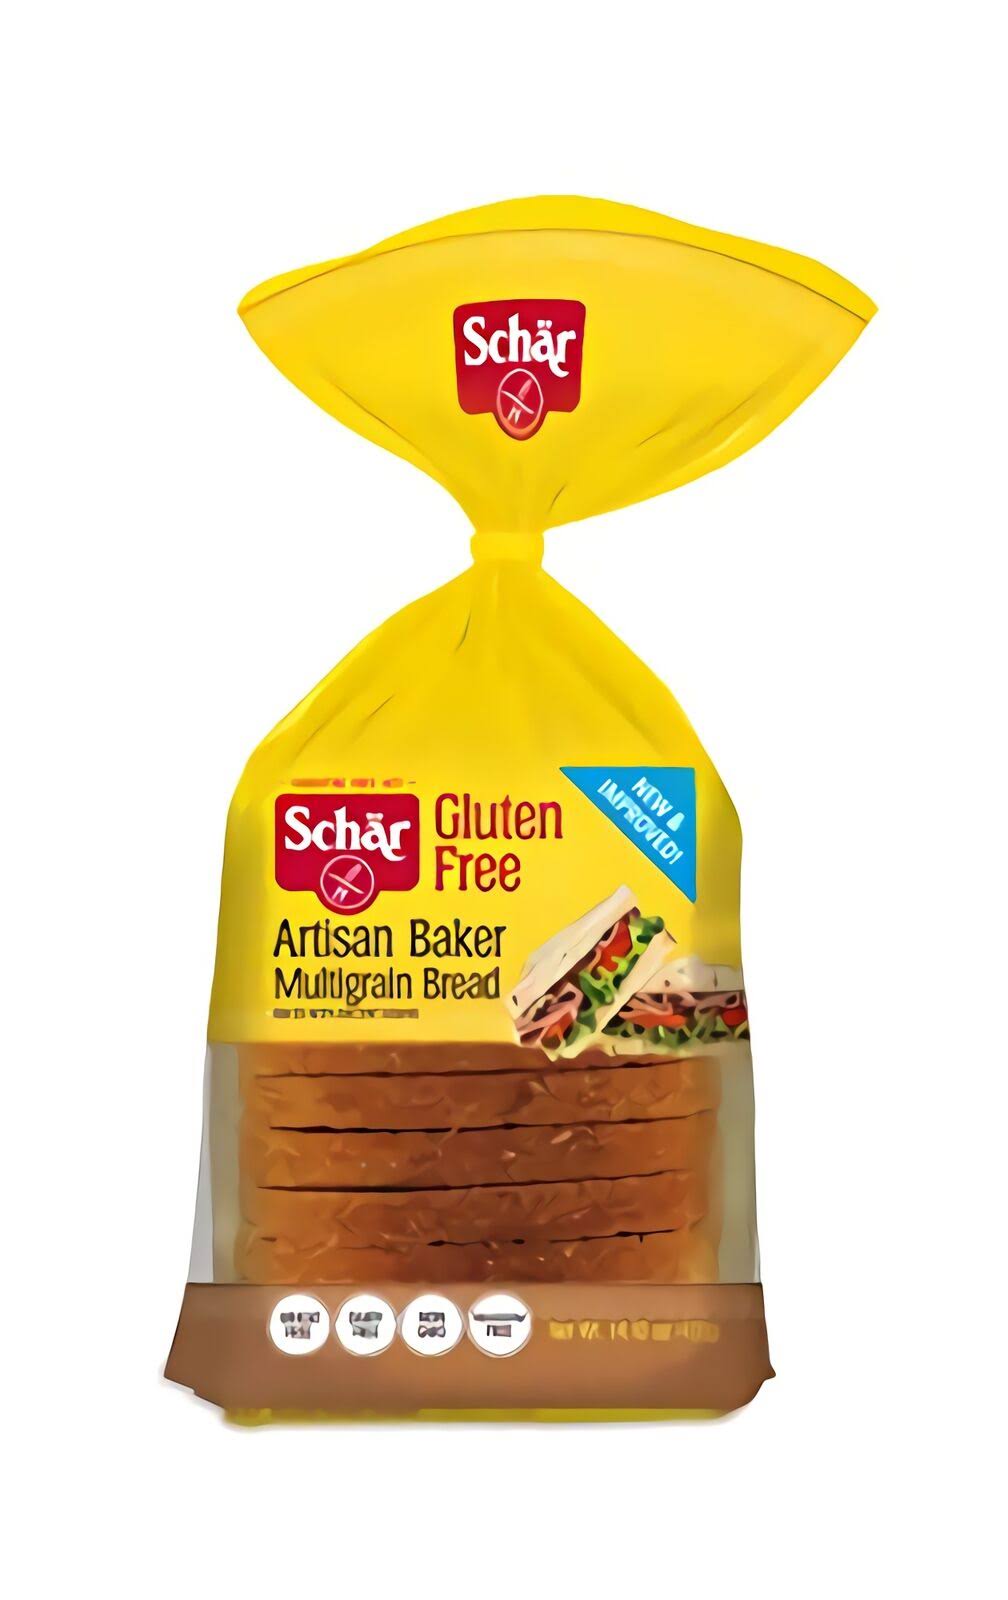 Schar Gluten Free Artisan Baker Multigrain Bread 14.1 oz.